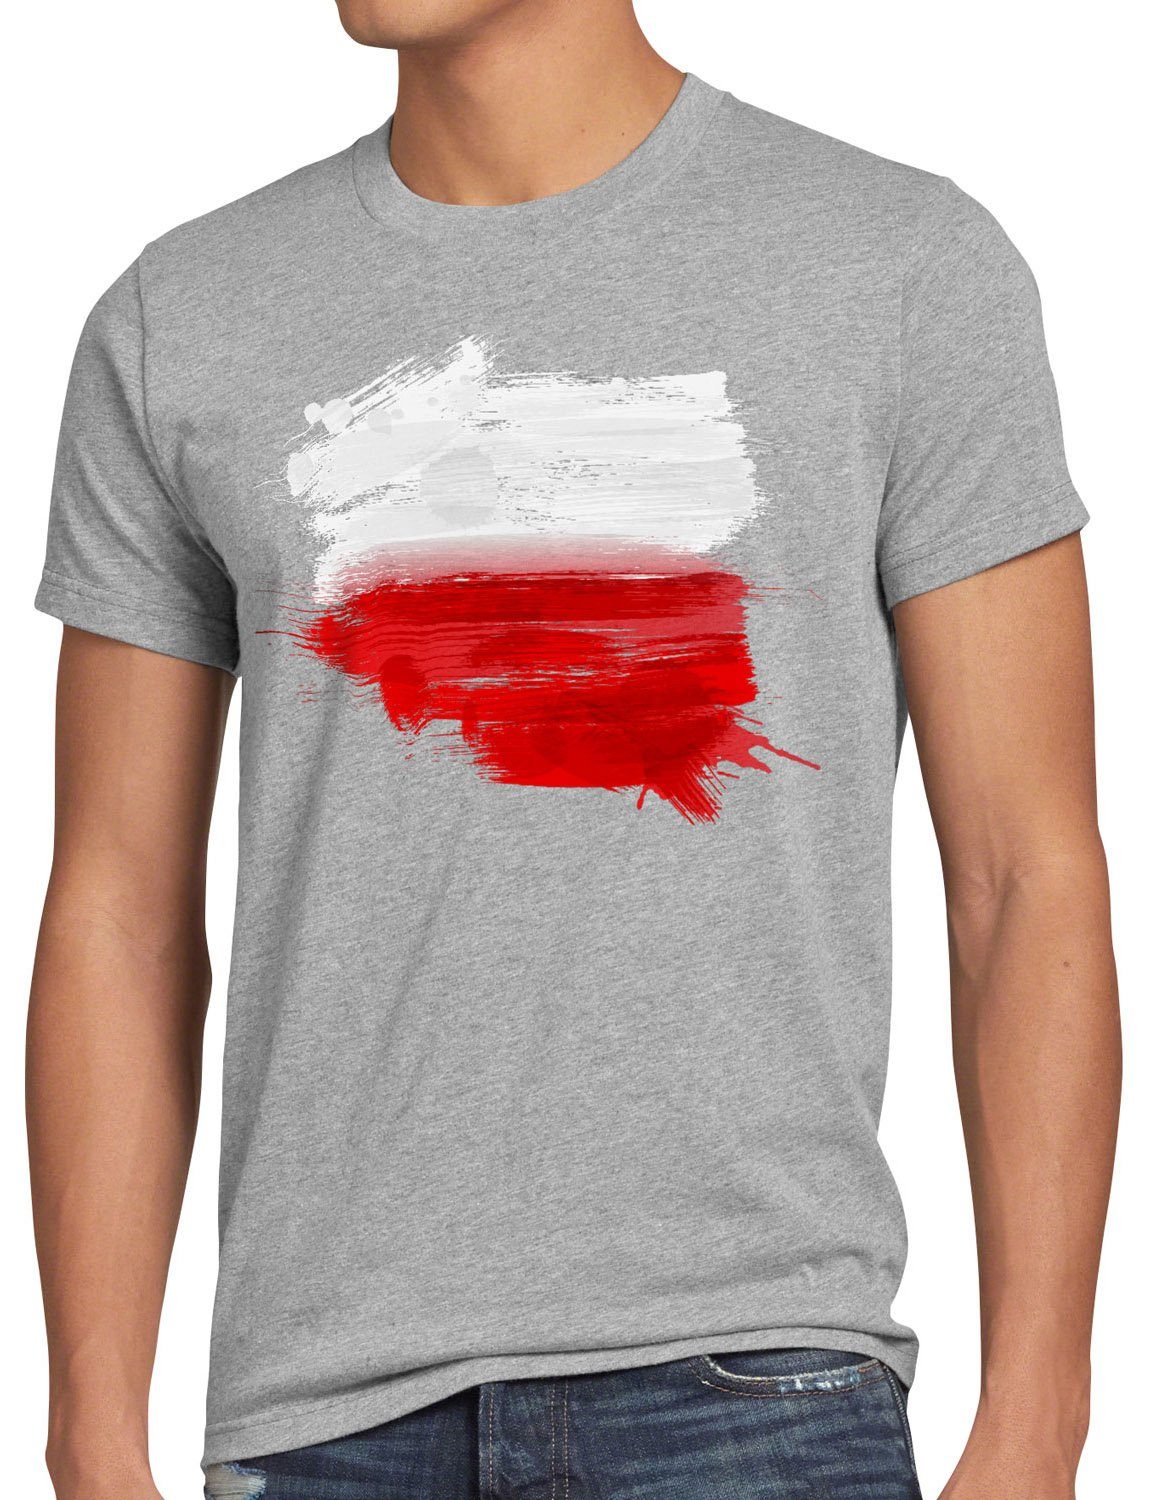 100% authentisch! style3 Print-Shirt Herren WM grau Flagge meliert EM Sport Polen Fußball T-Shirt Polska Fahne